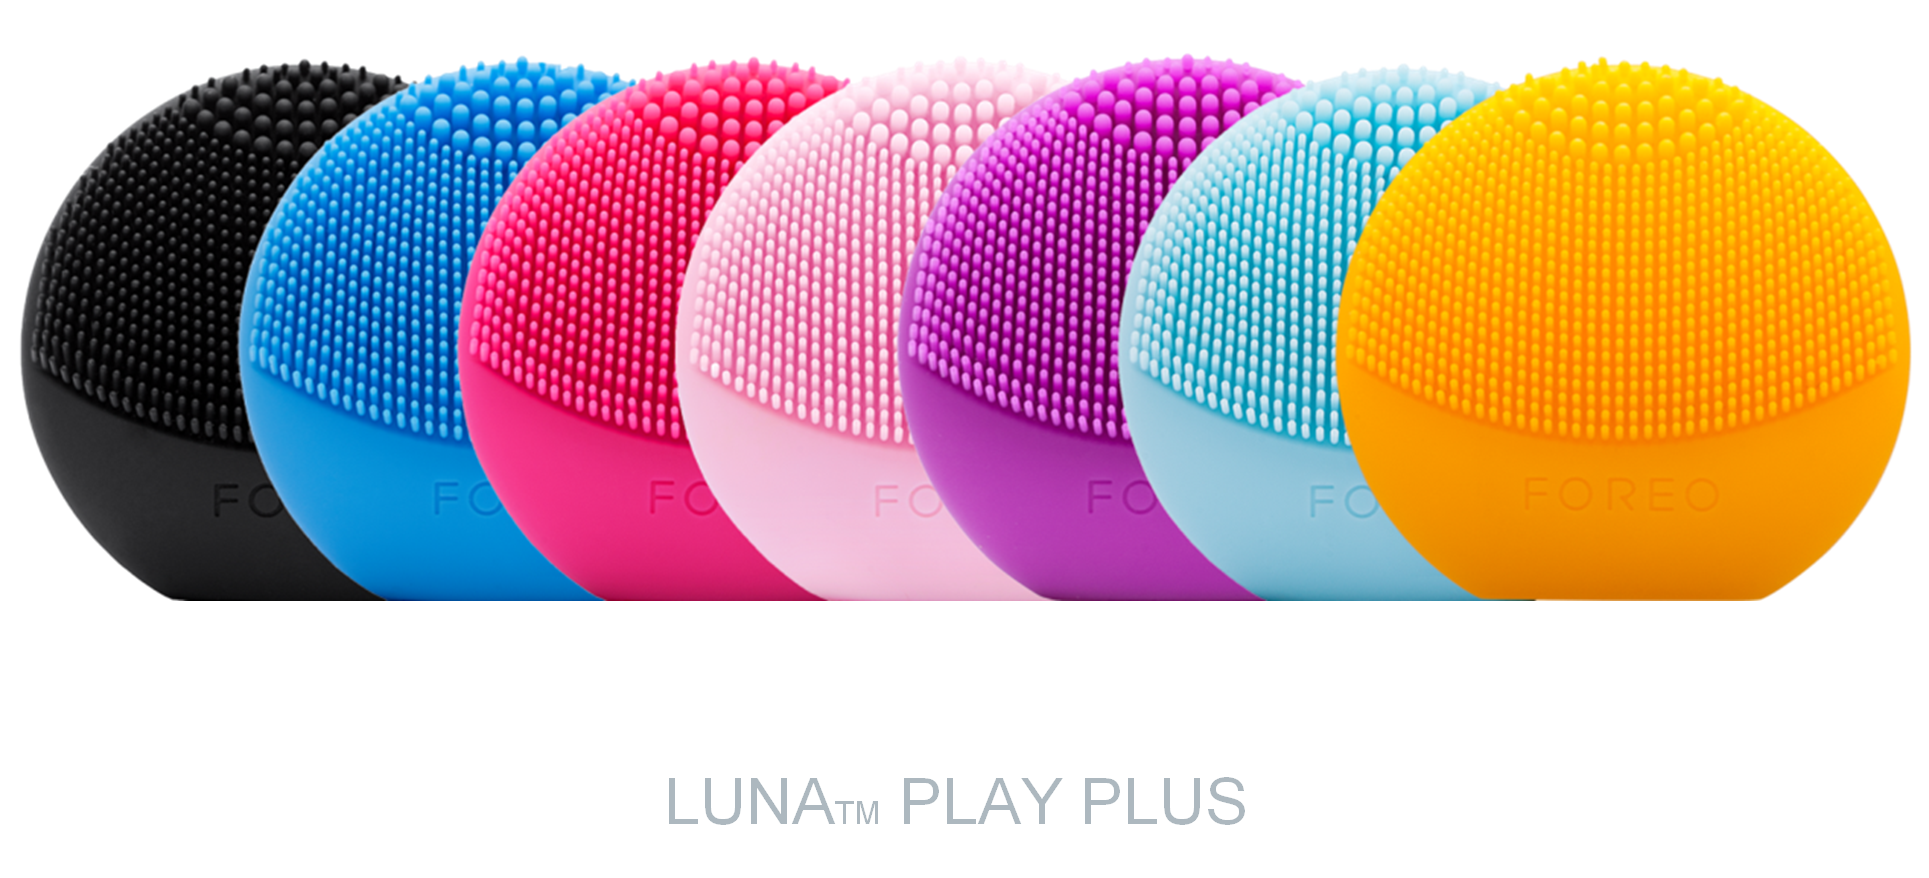 FOREO Luna Play Plus